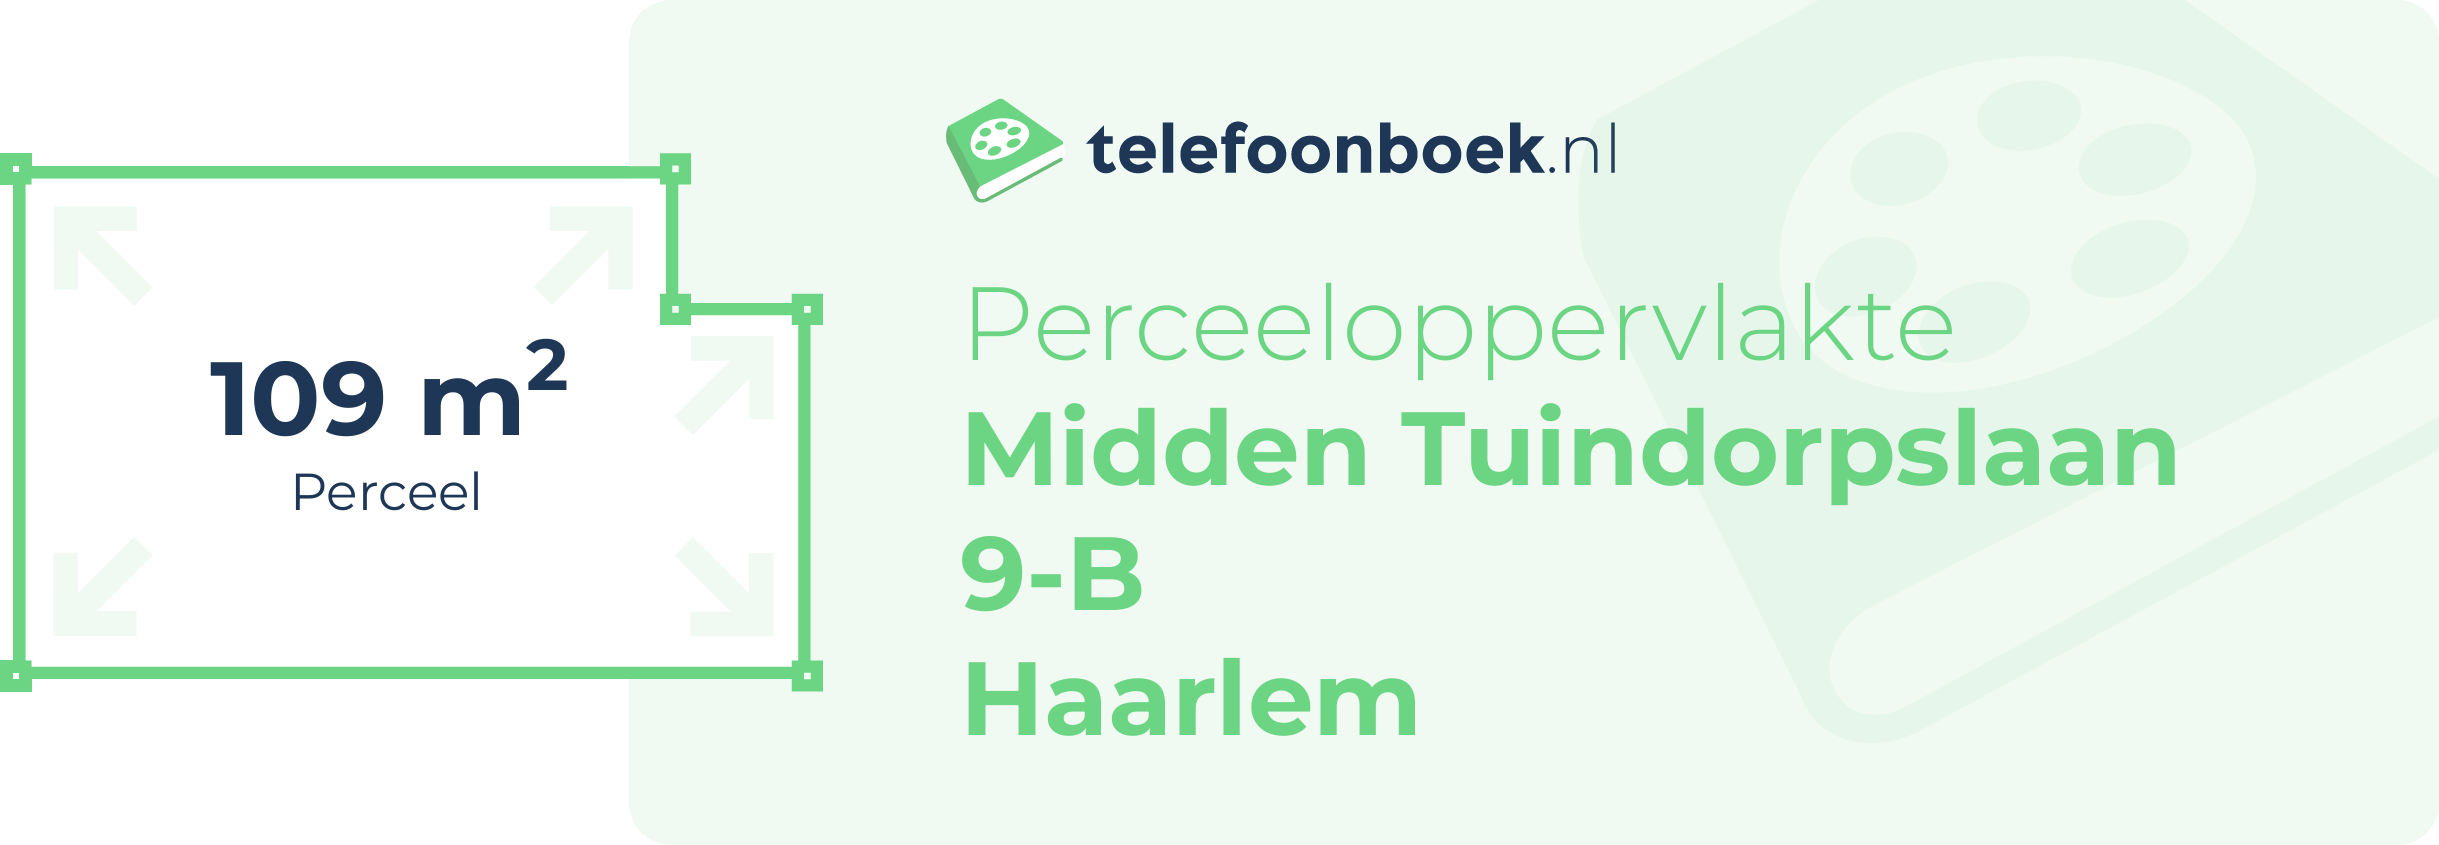 Perceeloppervlakte Midden Tuindorpslaan 9-B Haarlem